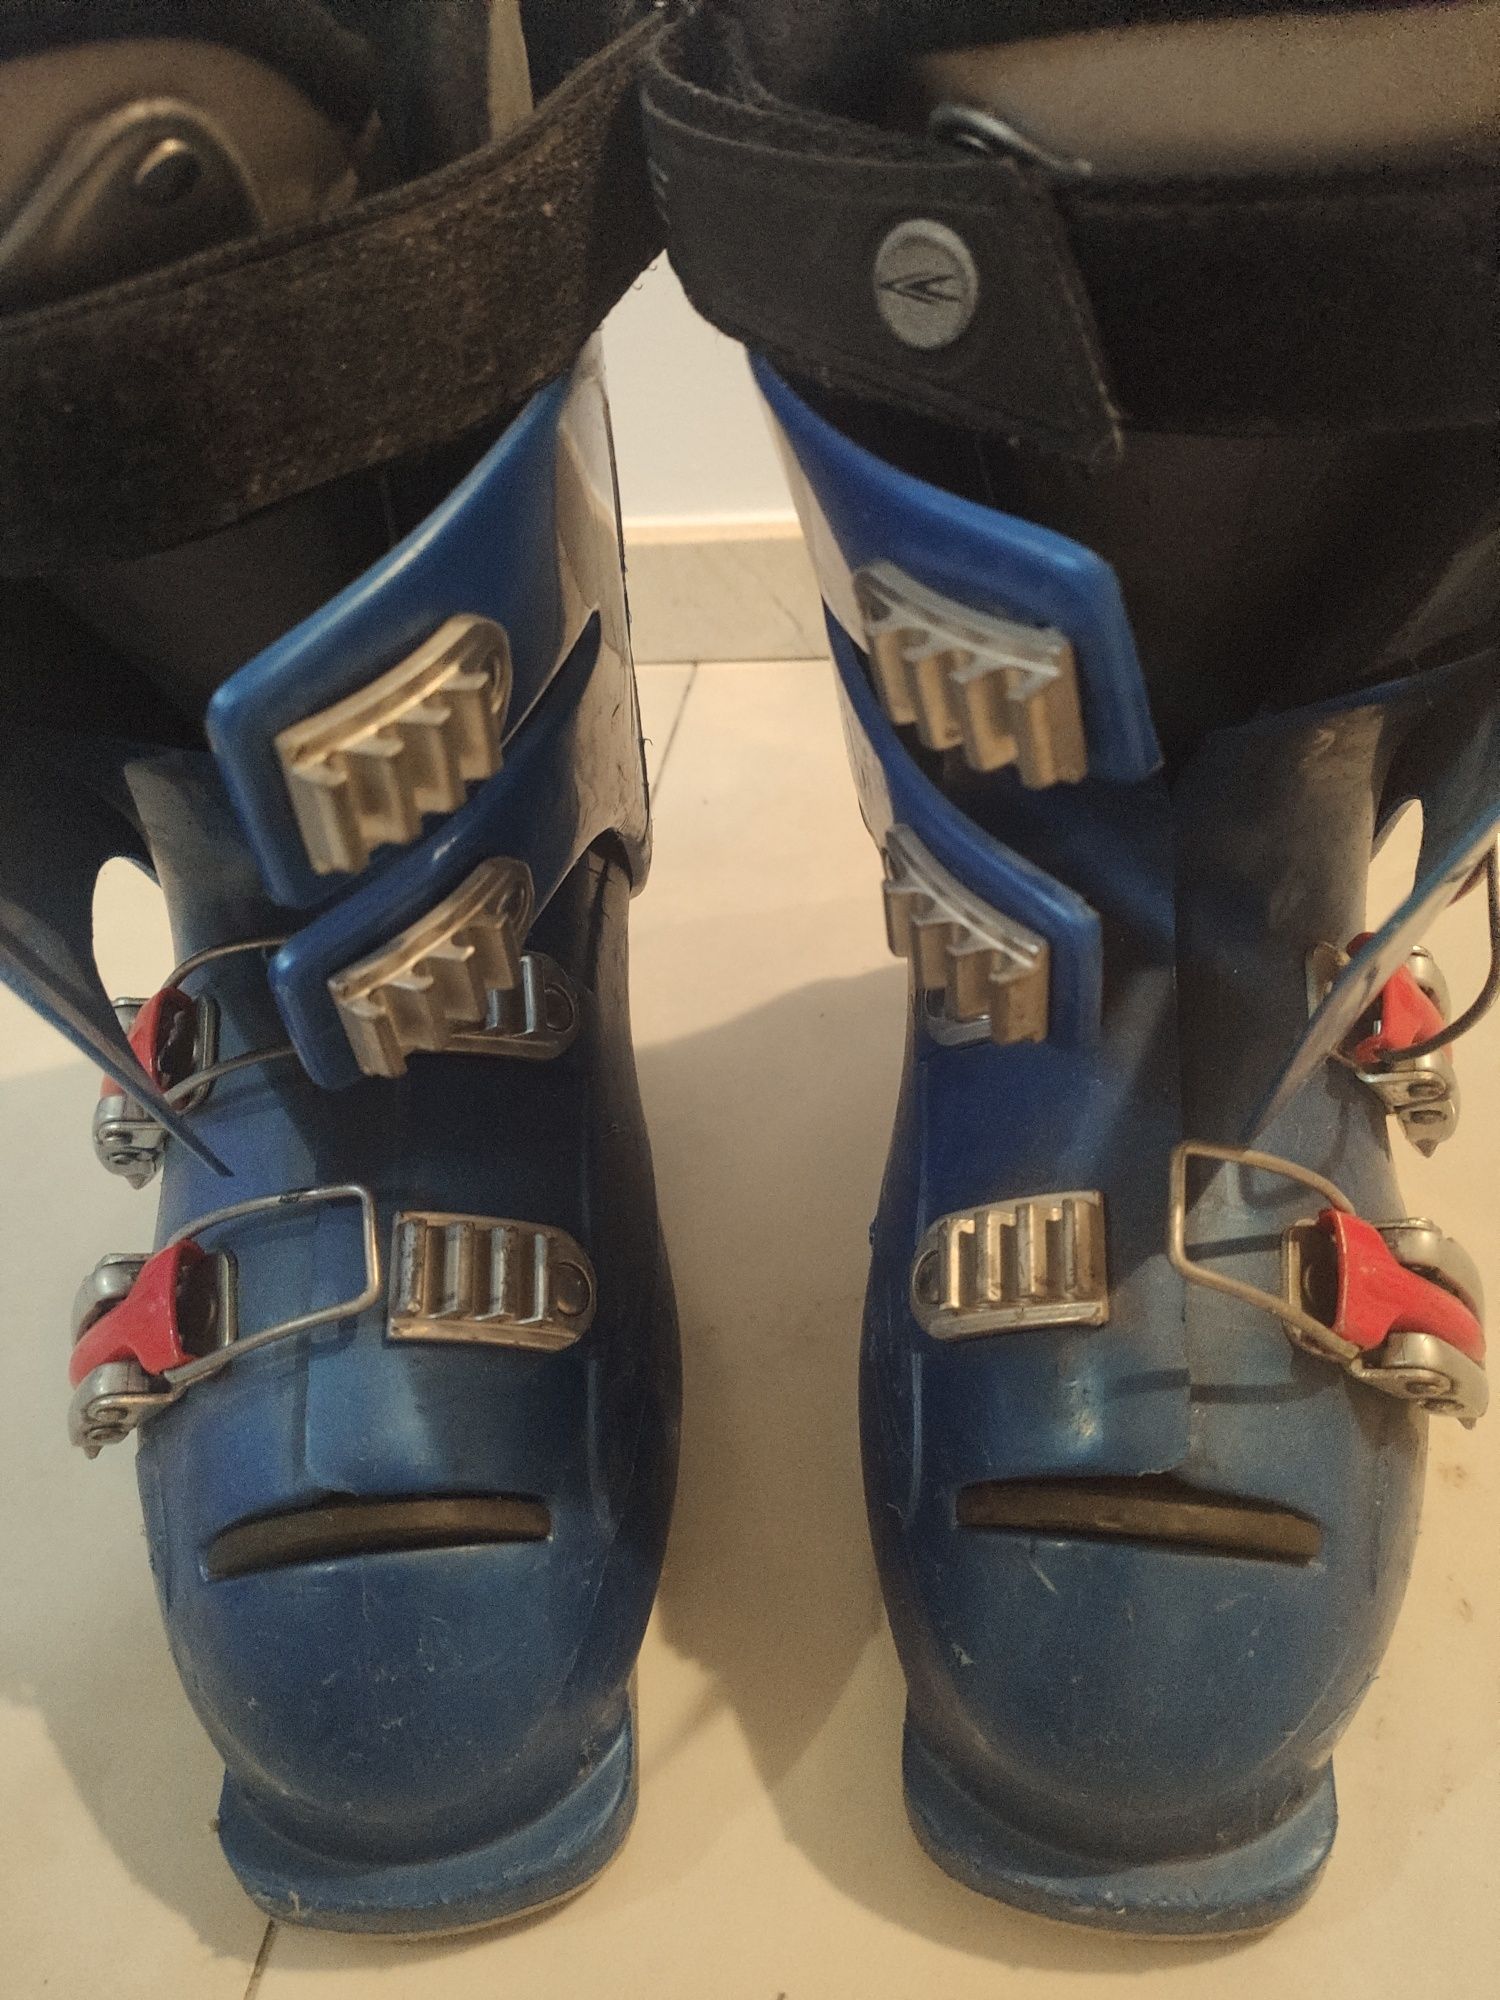 Buty narciarskie Lange 23,5 cm